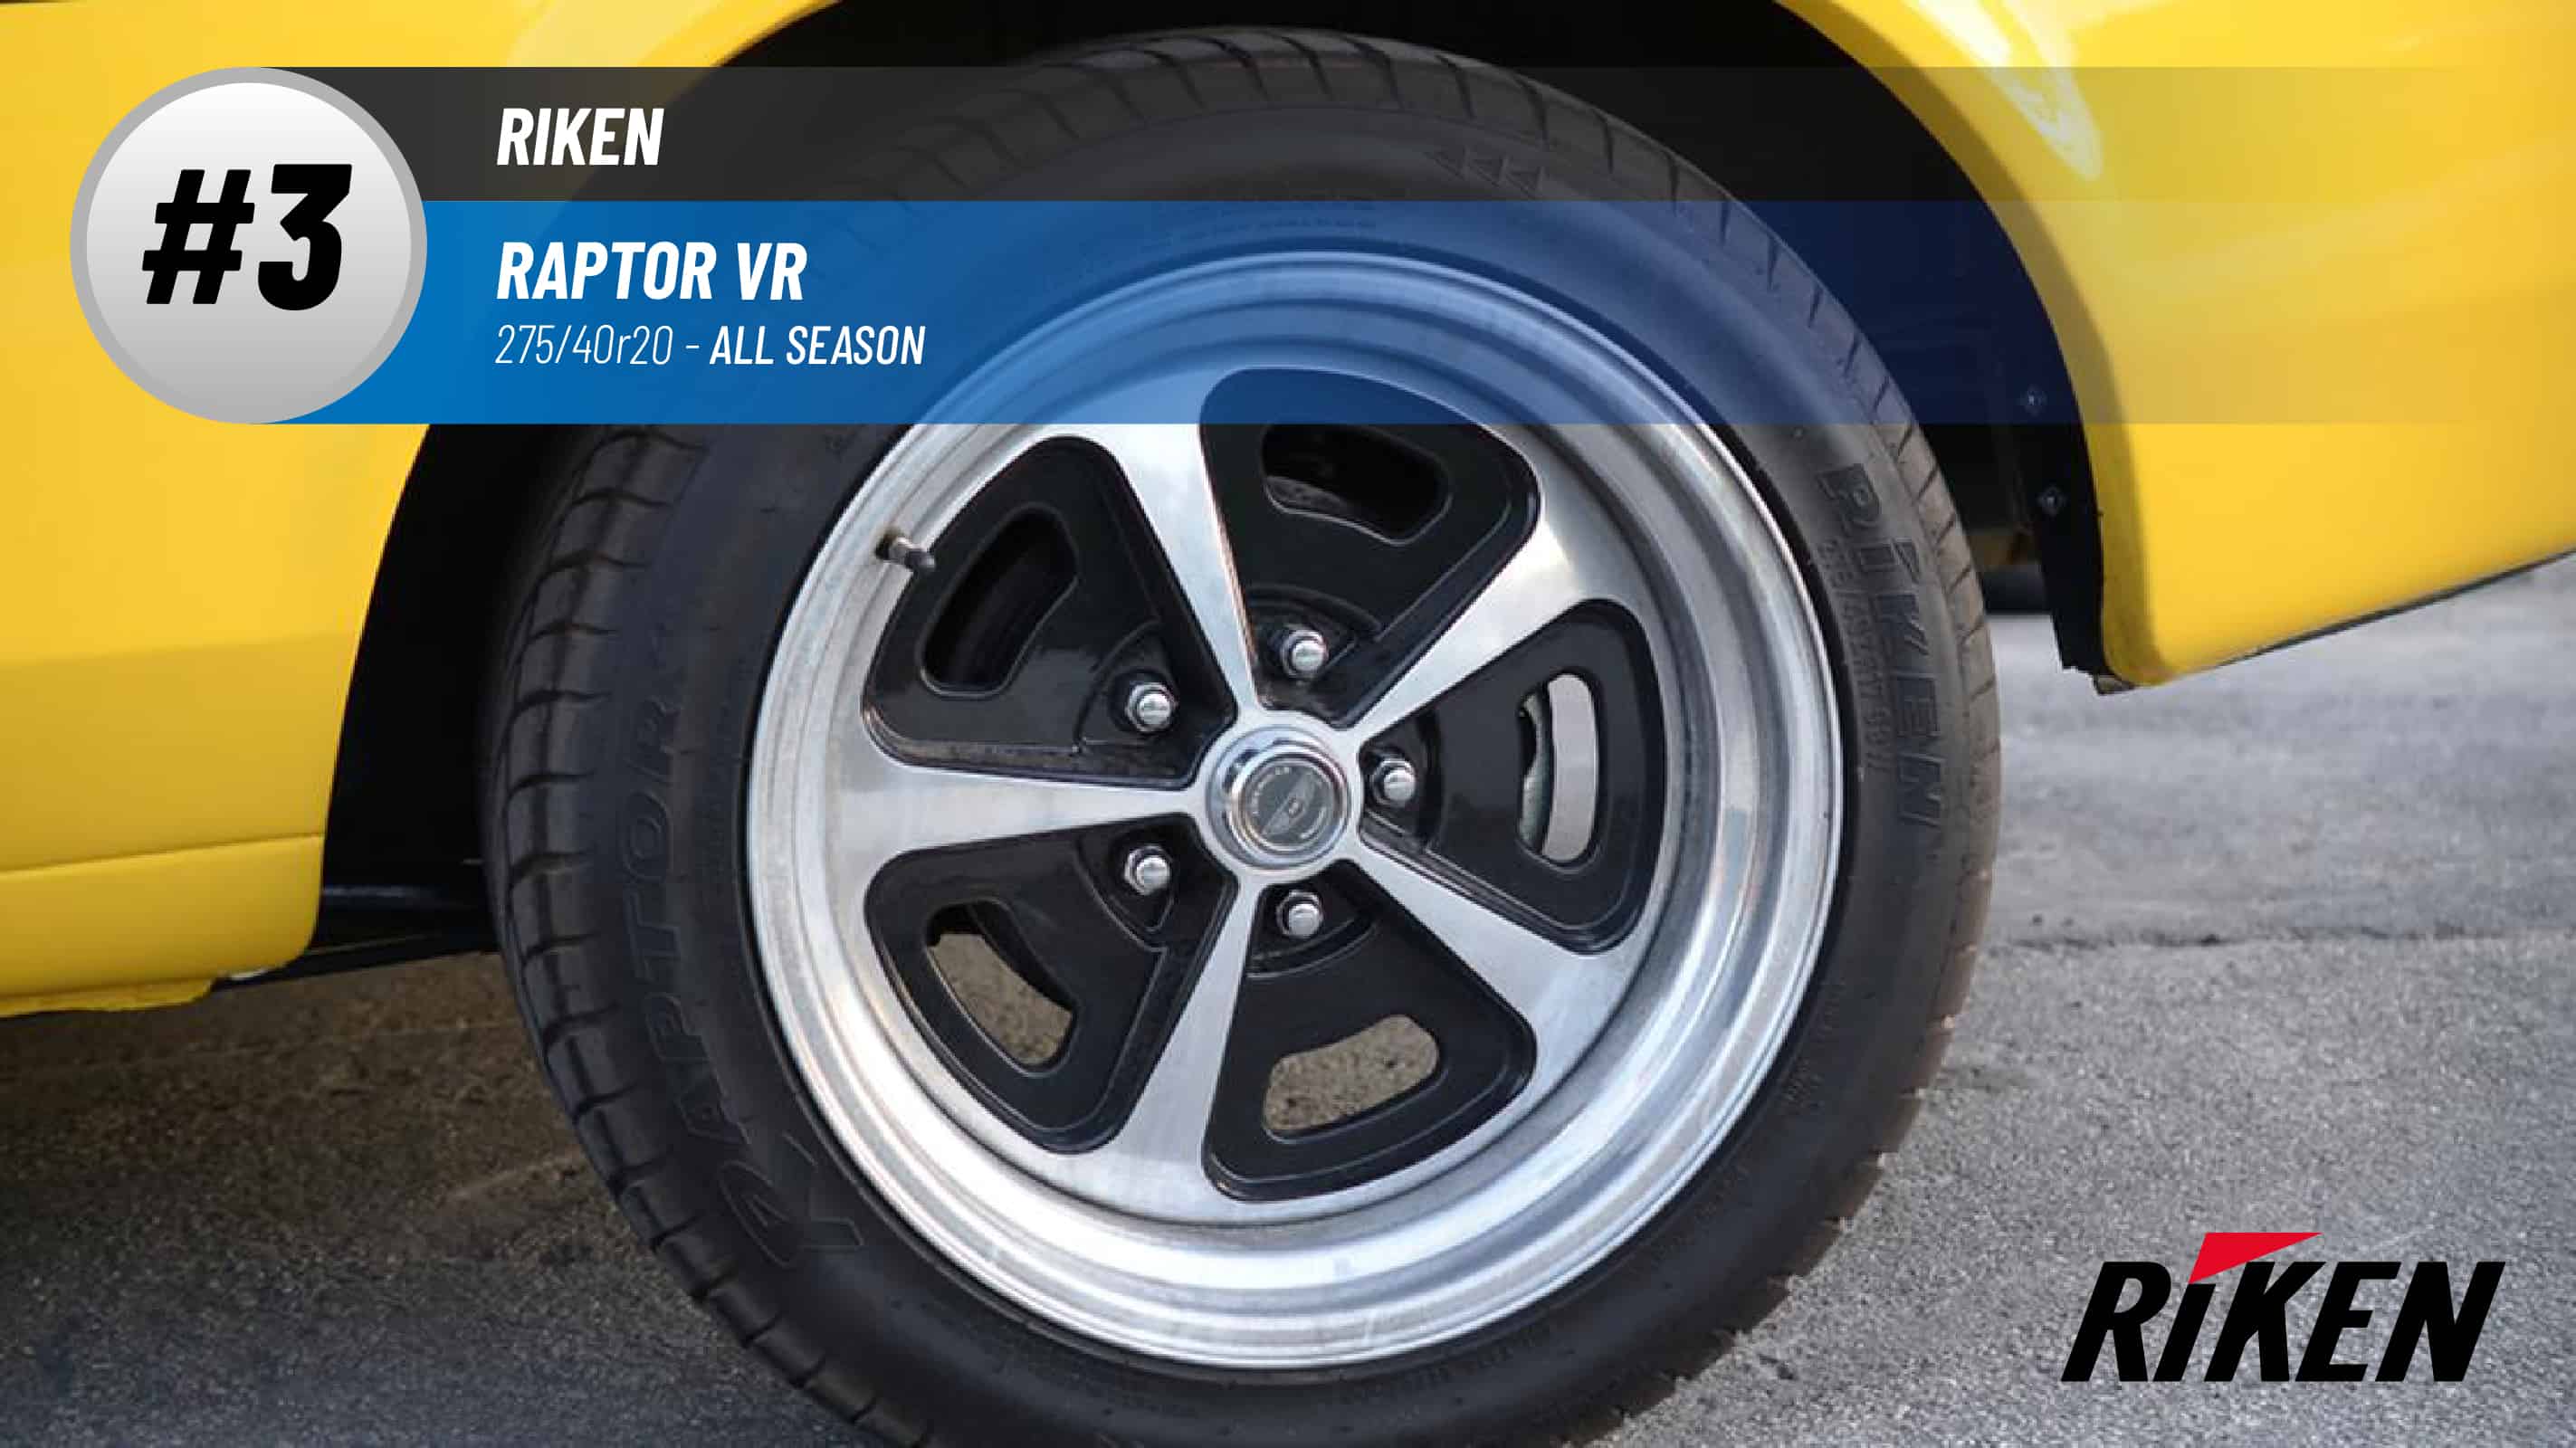 Top #3 All Season Tires: Riken Raptor VR – 275/40r20